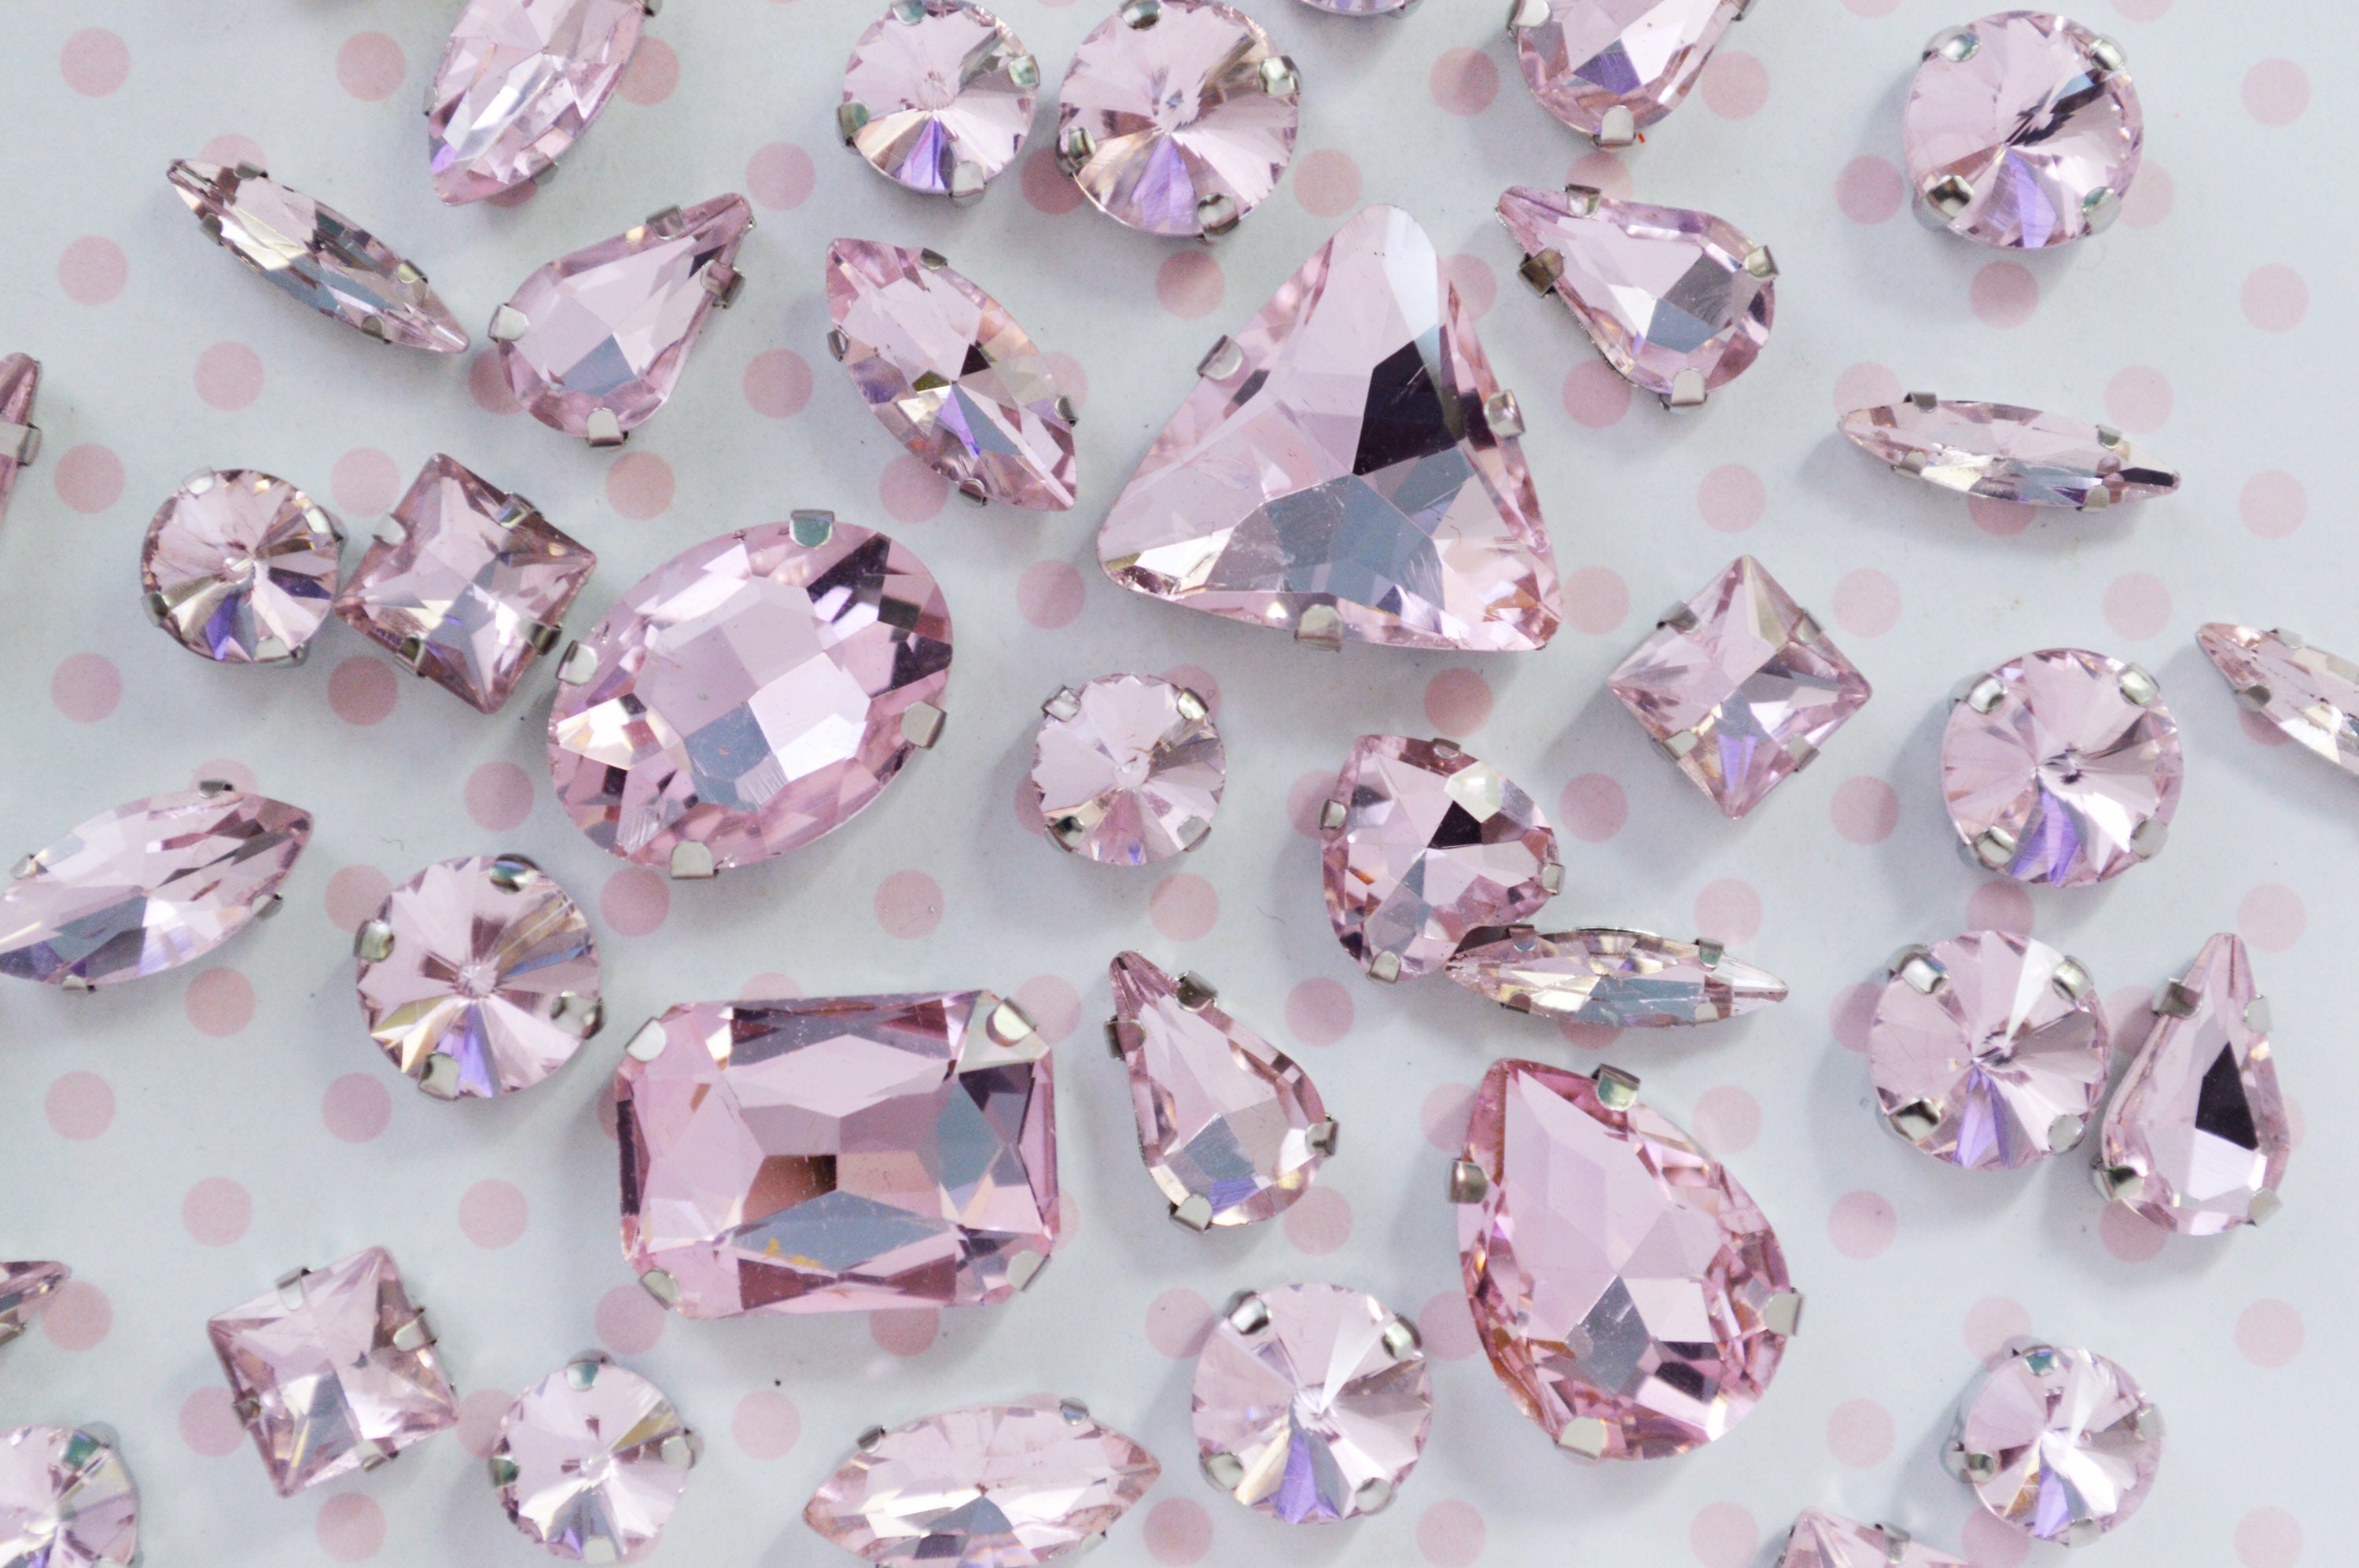 qiipii 2250Pcs Pink Nail Rhinestones 120 Multi Shapes Flatback Rhinestones Big Gems +2130 Light Pink Round Beads K9 Glass Stones Diamonds Jewels